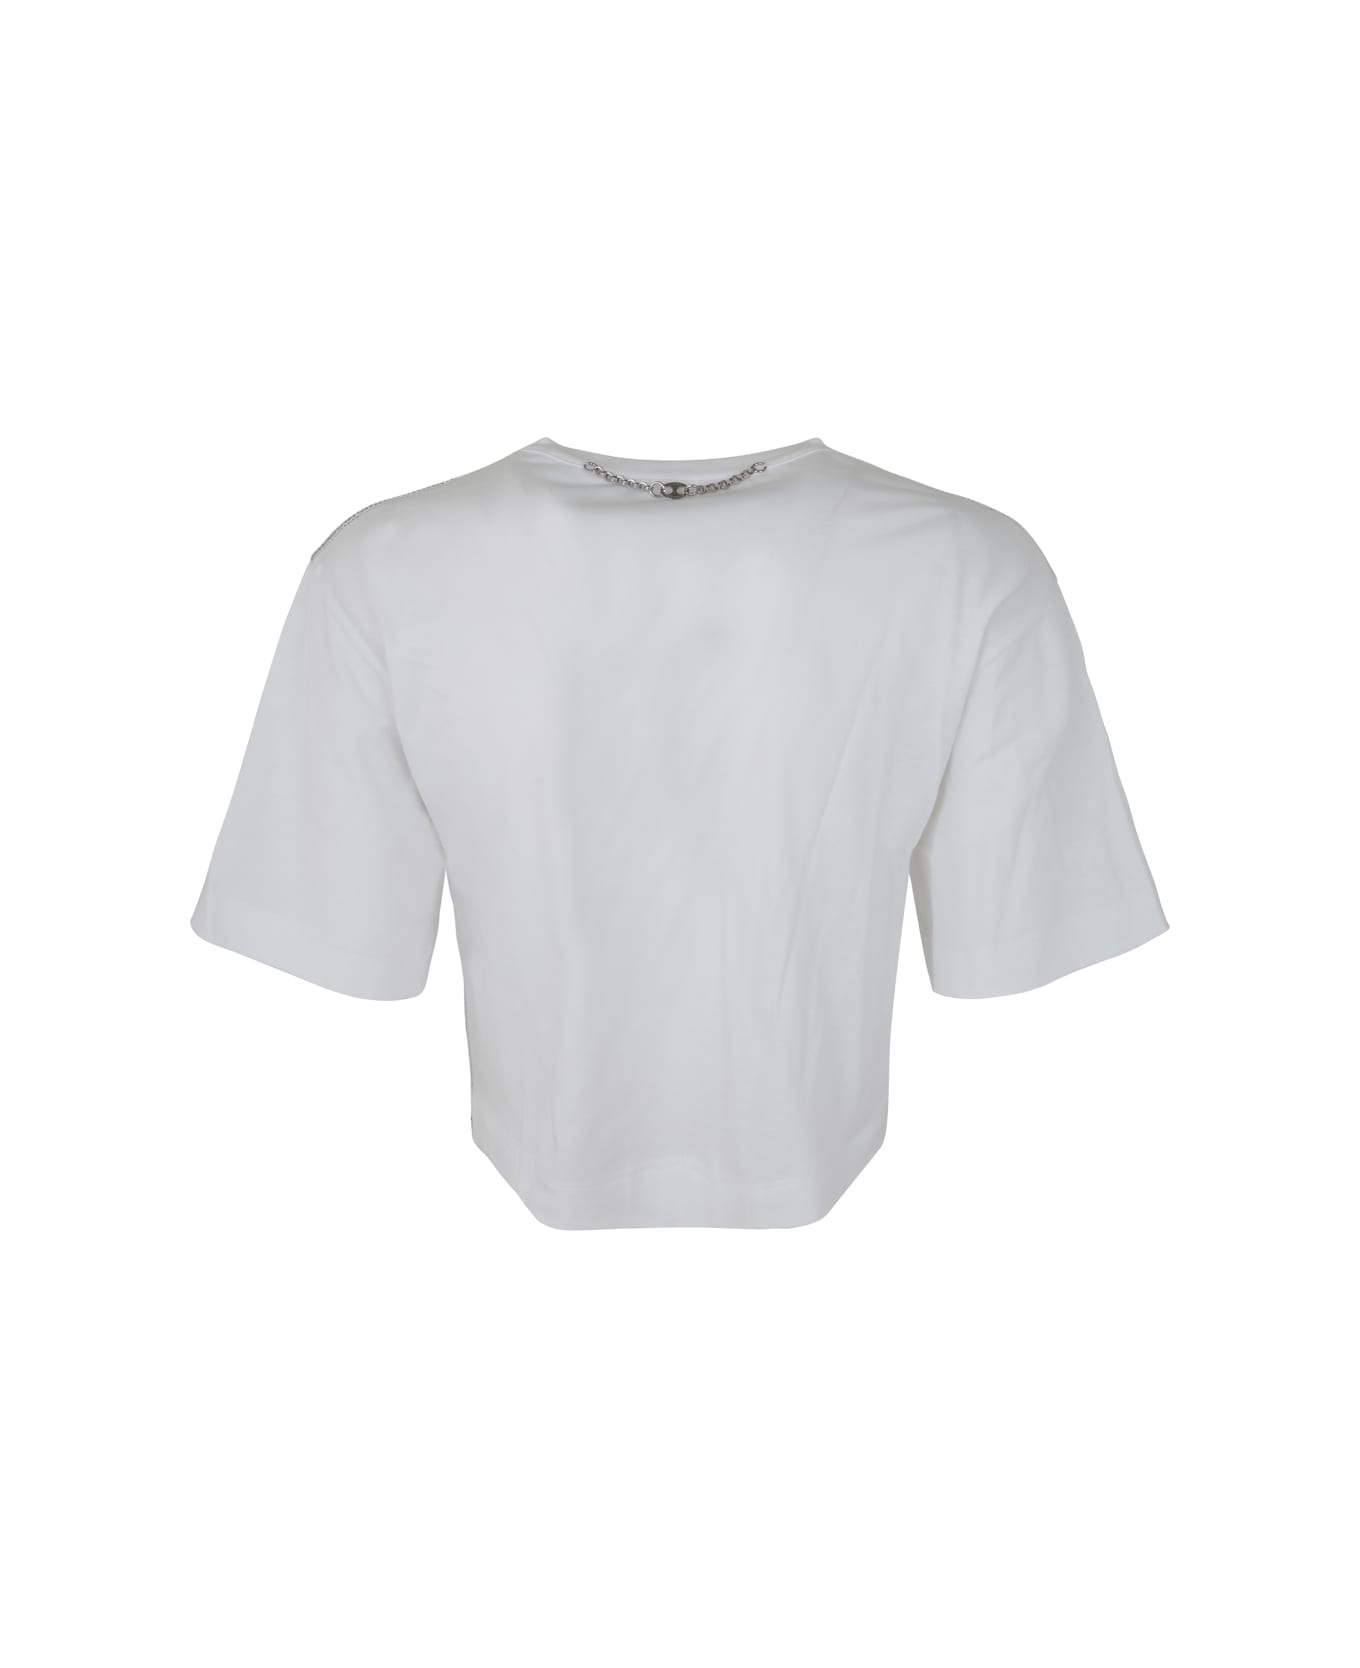 Paco Rabanne Haut Crew Neck T-shirt - Silver White